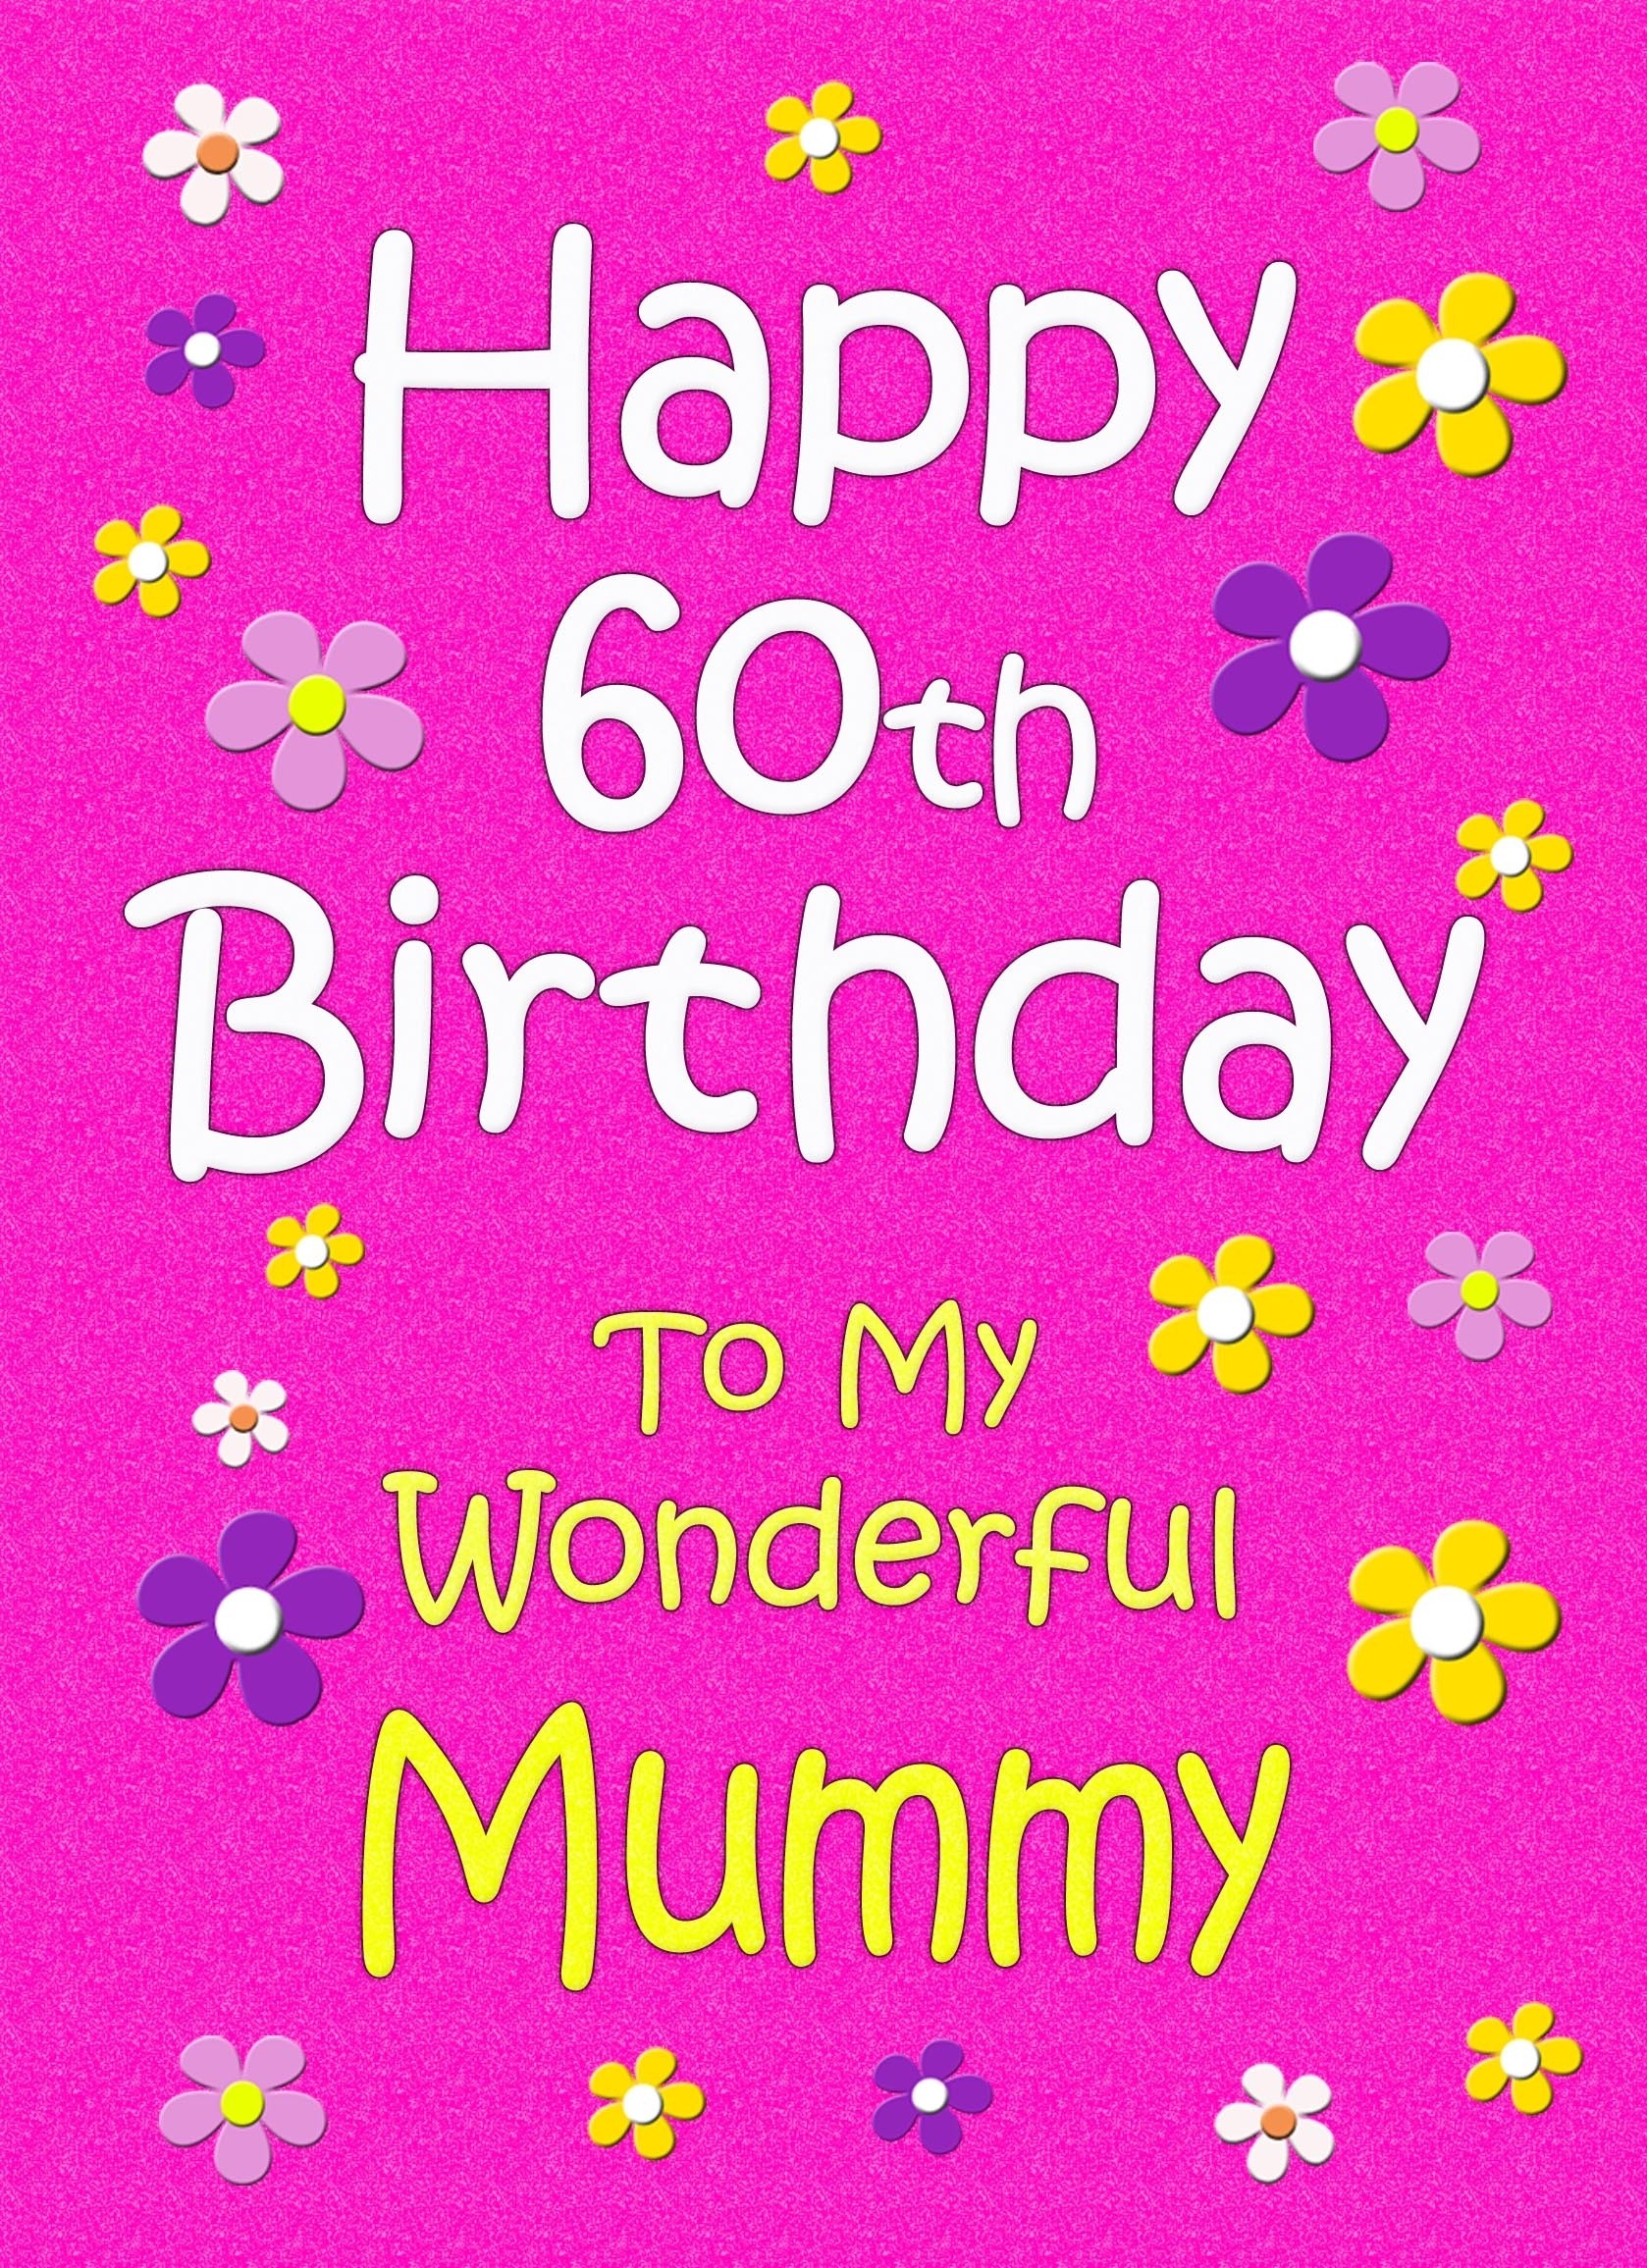 Mummy 60th Birthday Card (Pink)